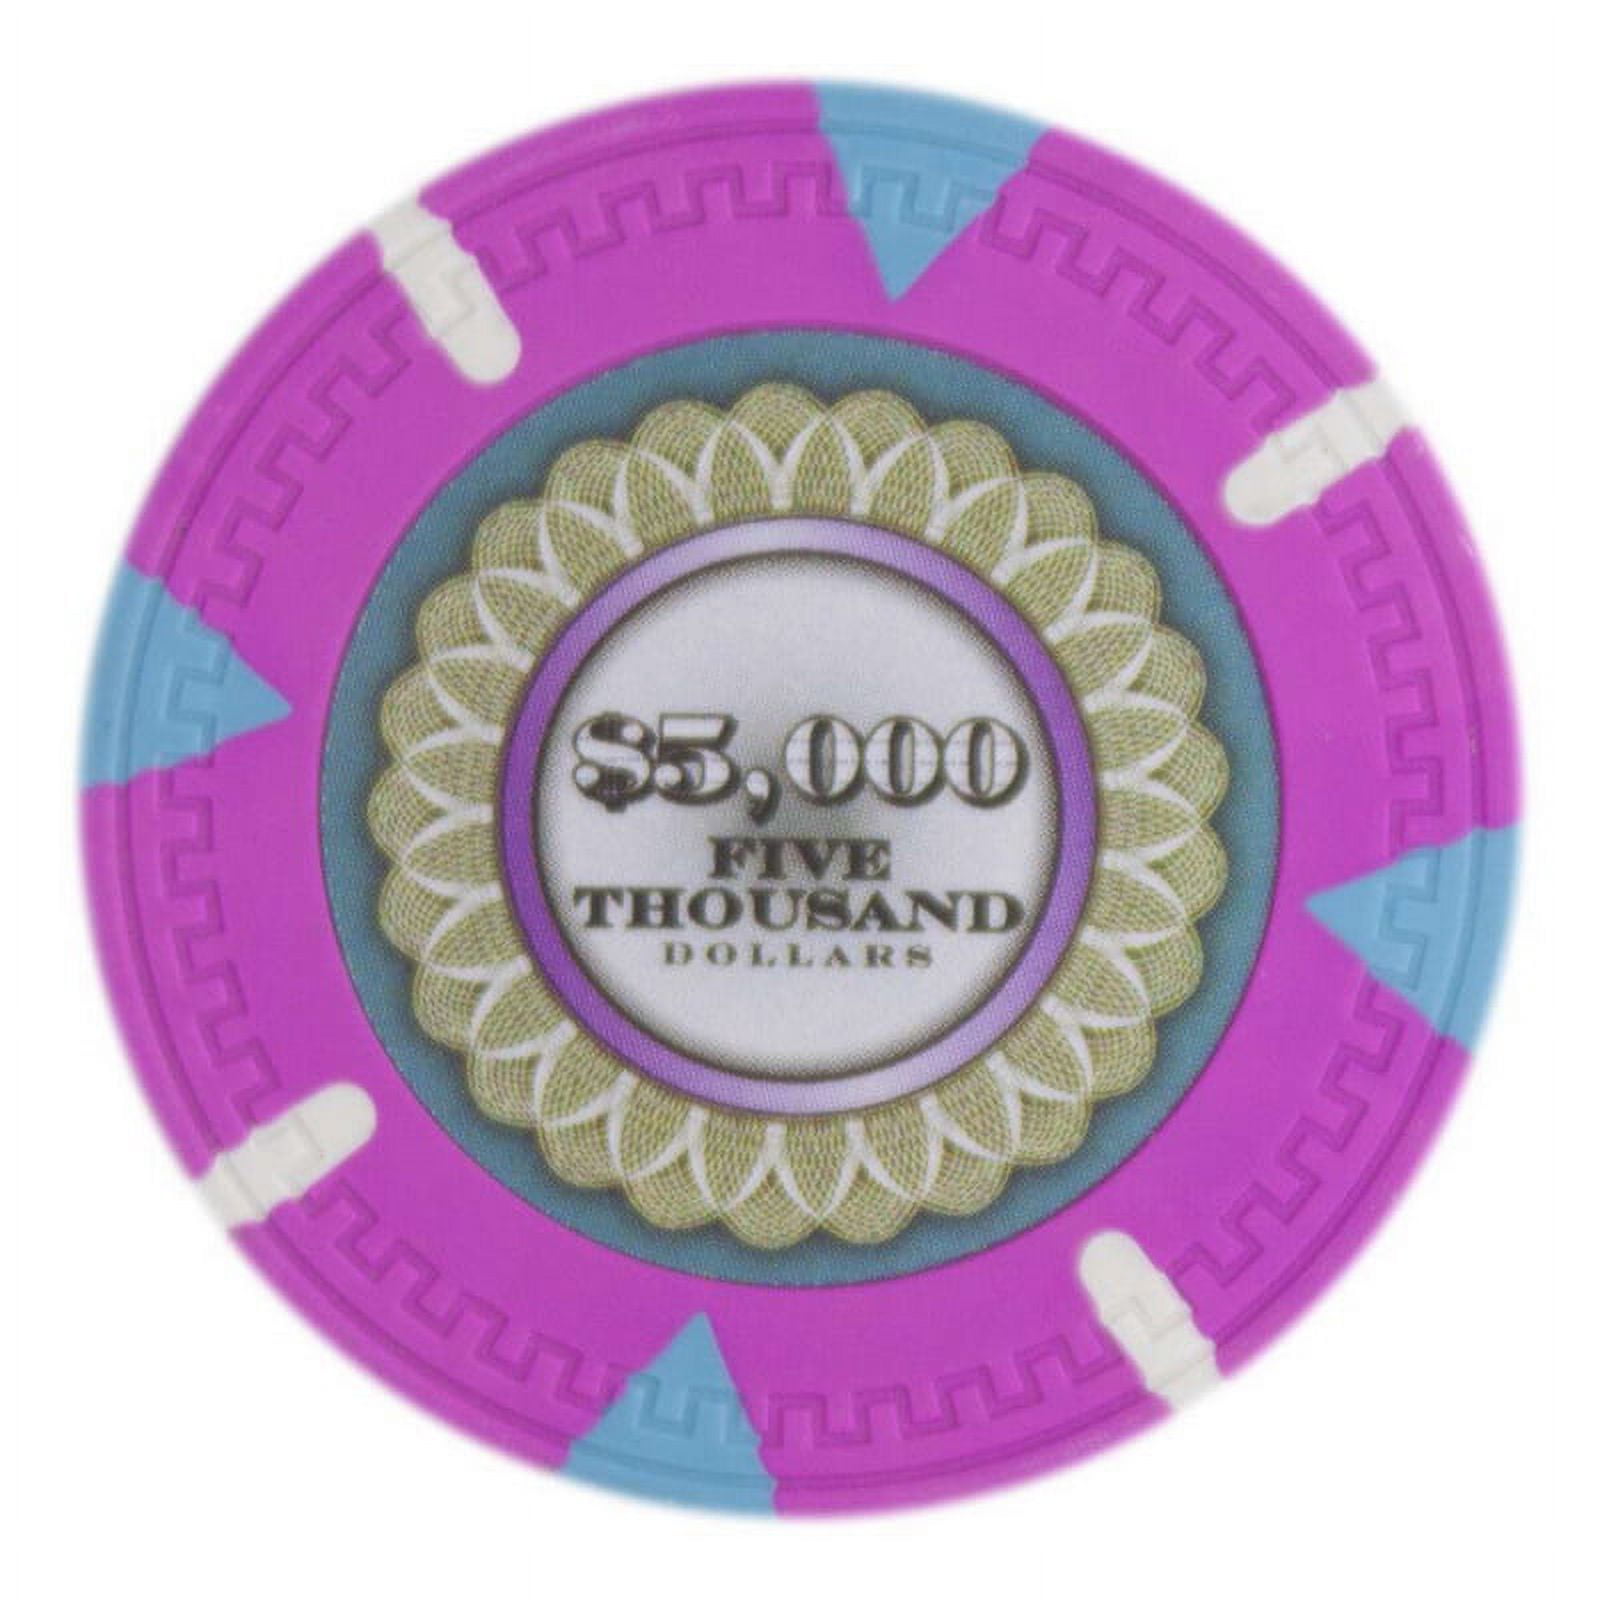 Cpmt-5000-25 13.5 G Mint - Dollar 5,000 - Roll Of 25